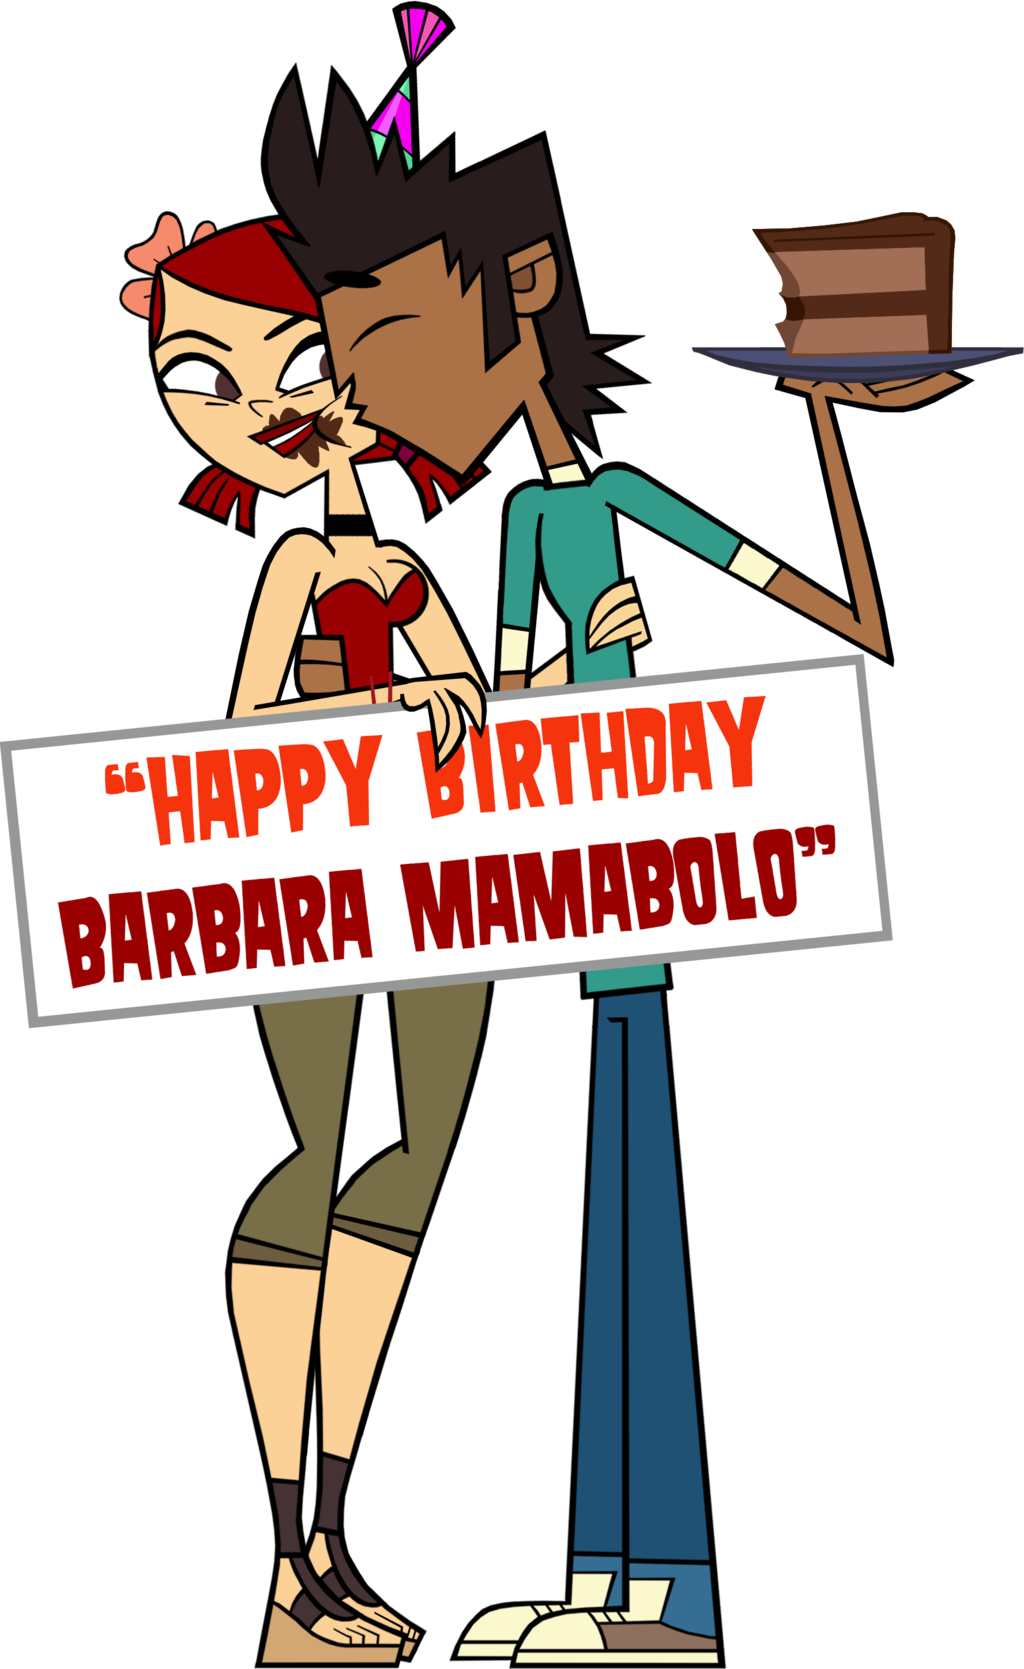 2 By Codylake B-day Present For Barbara Mamabolo - Comics (1024x1669)